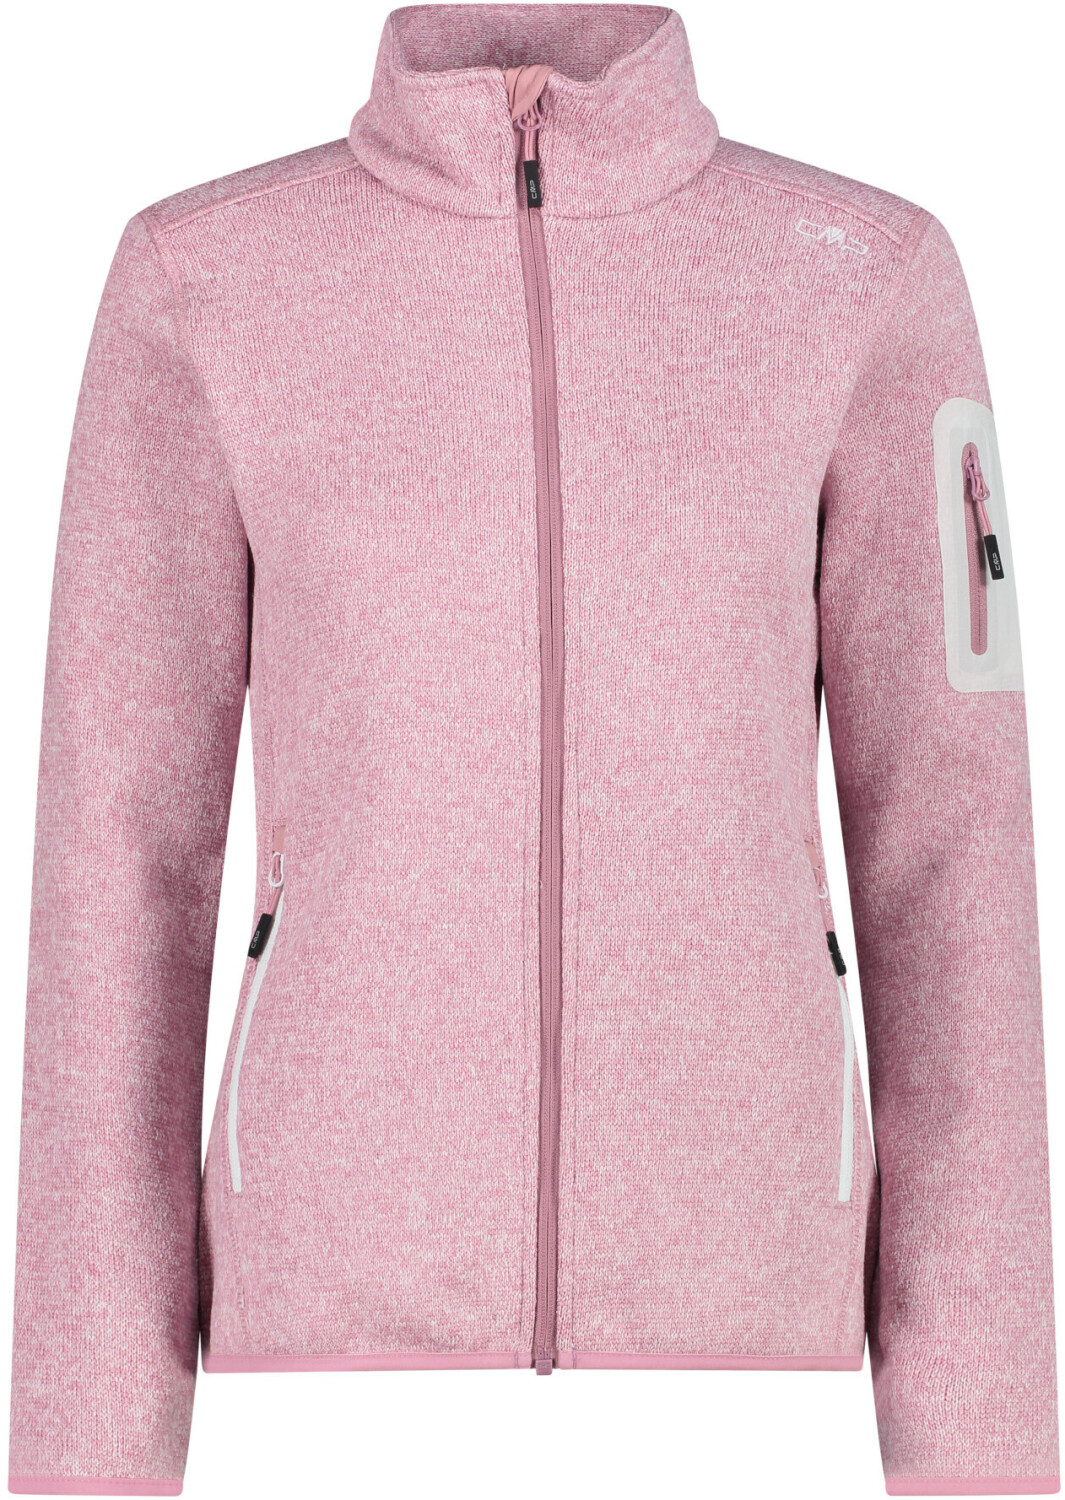 CMP Fleece Jacket Knit-Tech Melange (3H14746) fard-bianco ab 33,66 € |  Preisvergleich bei